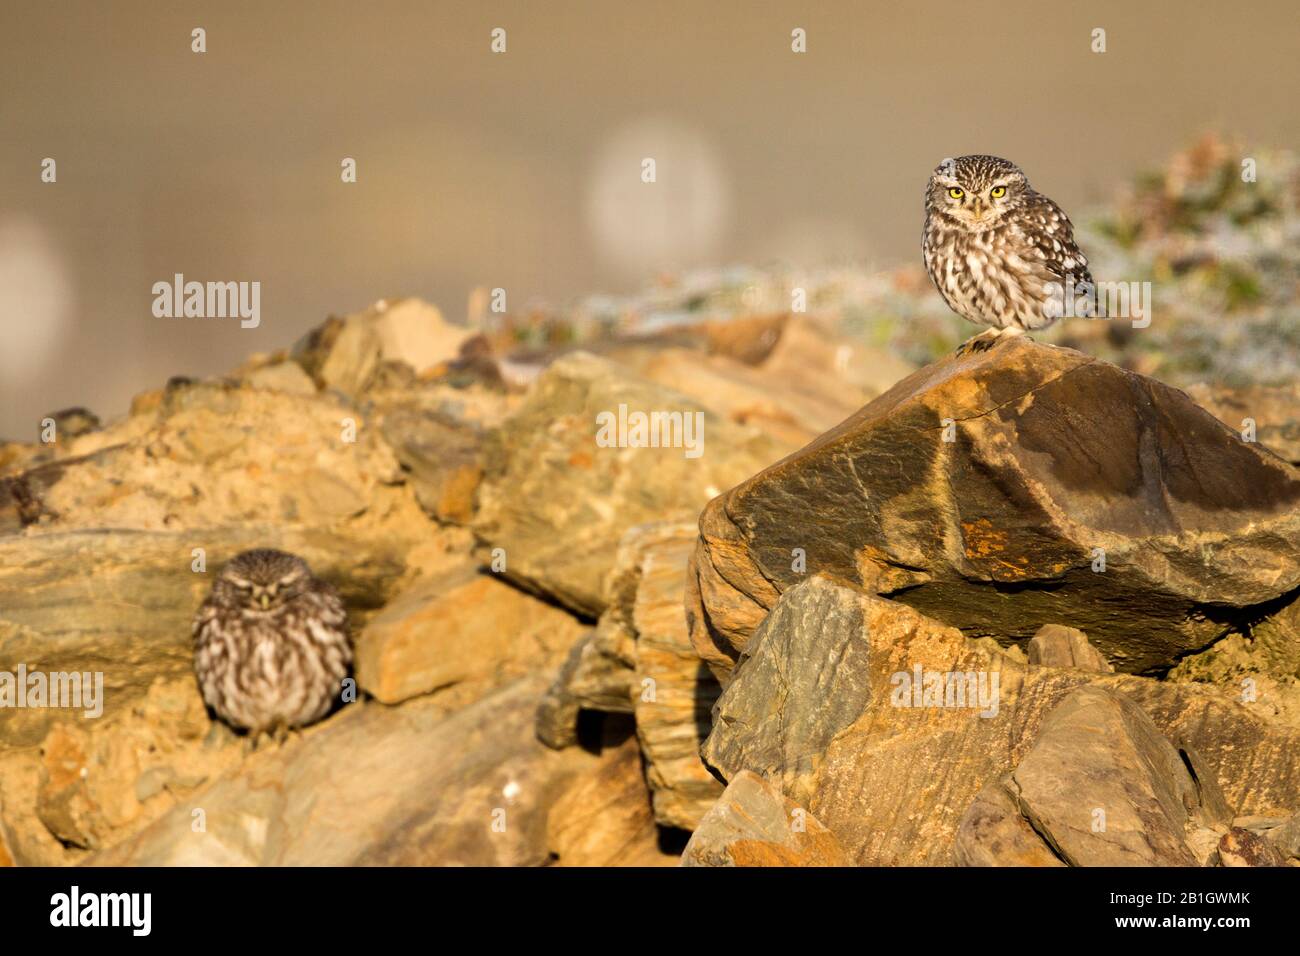 West European Little Owl (Athene noctua vidalii, Athene vidalii), pair on the ground, Spain Stock Photo